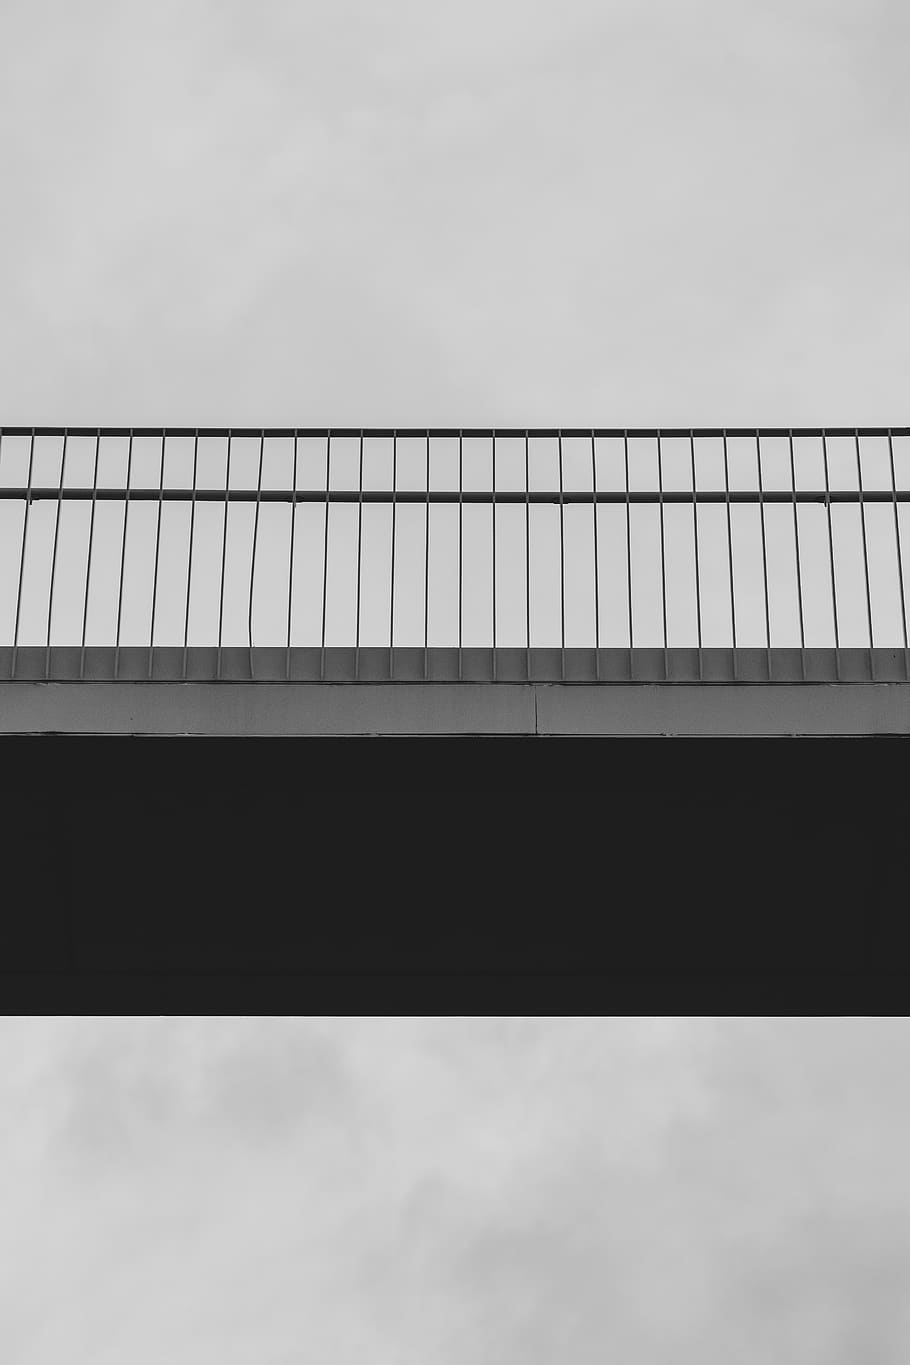 low-angle photography of gray concrete bridge, road, building